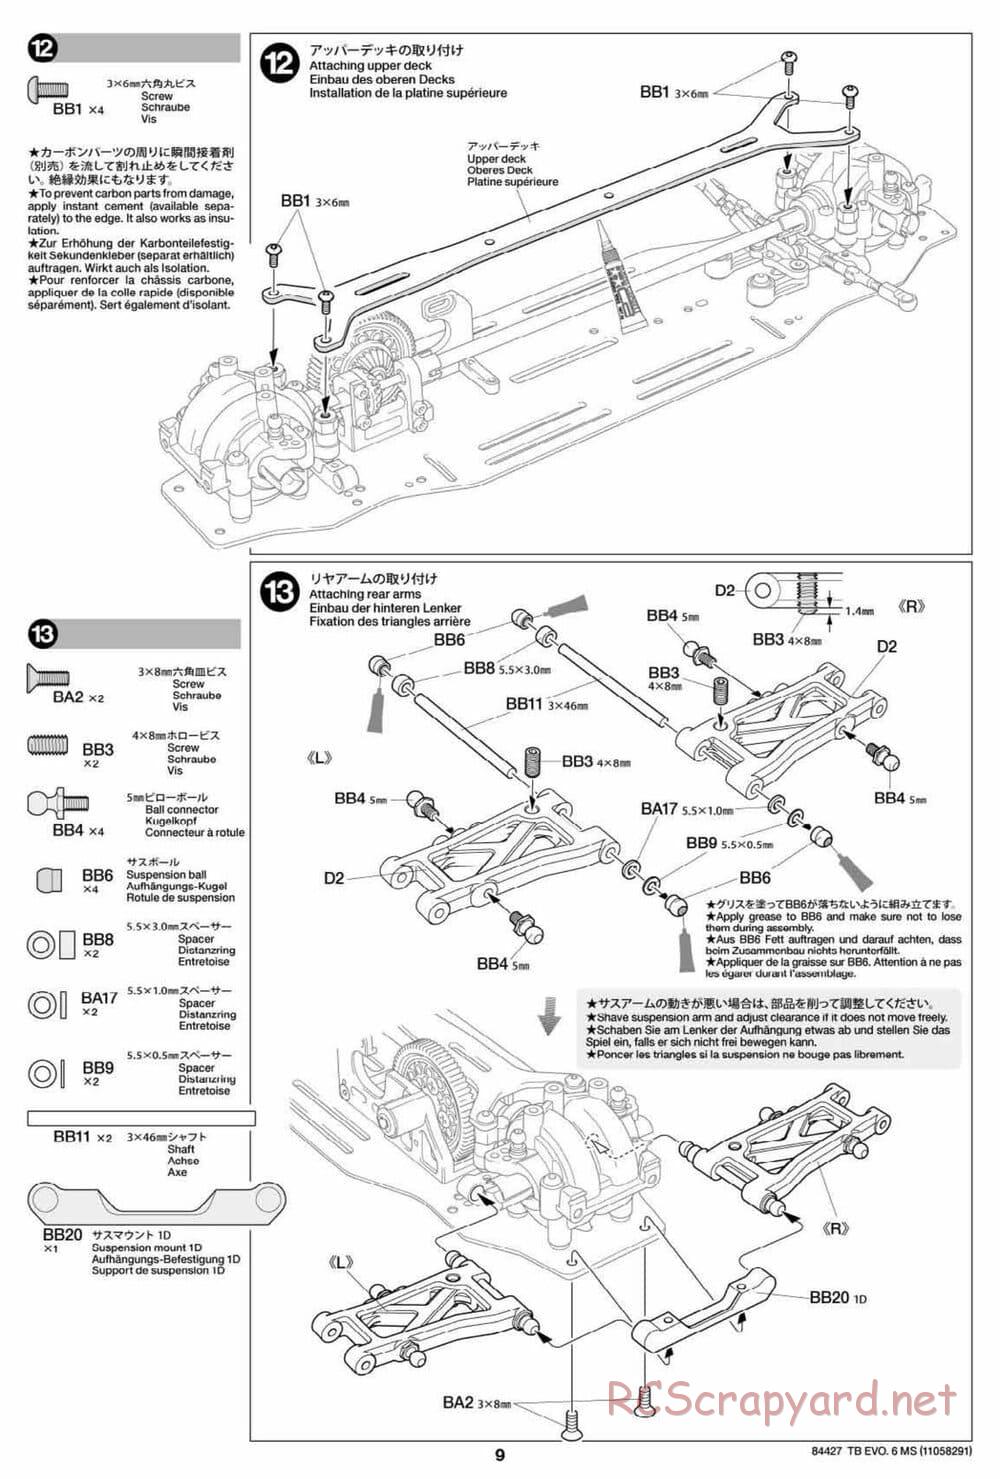 Tamiya - TB Evo.6 MS Chassis - Manual - Page 9